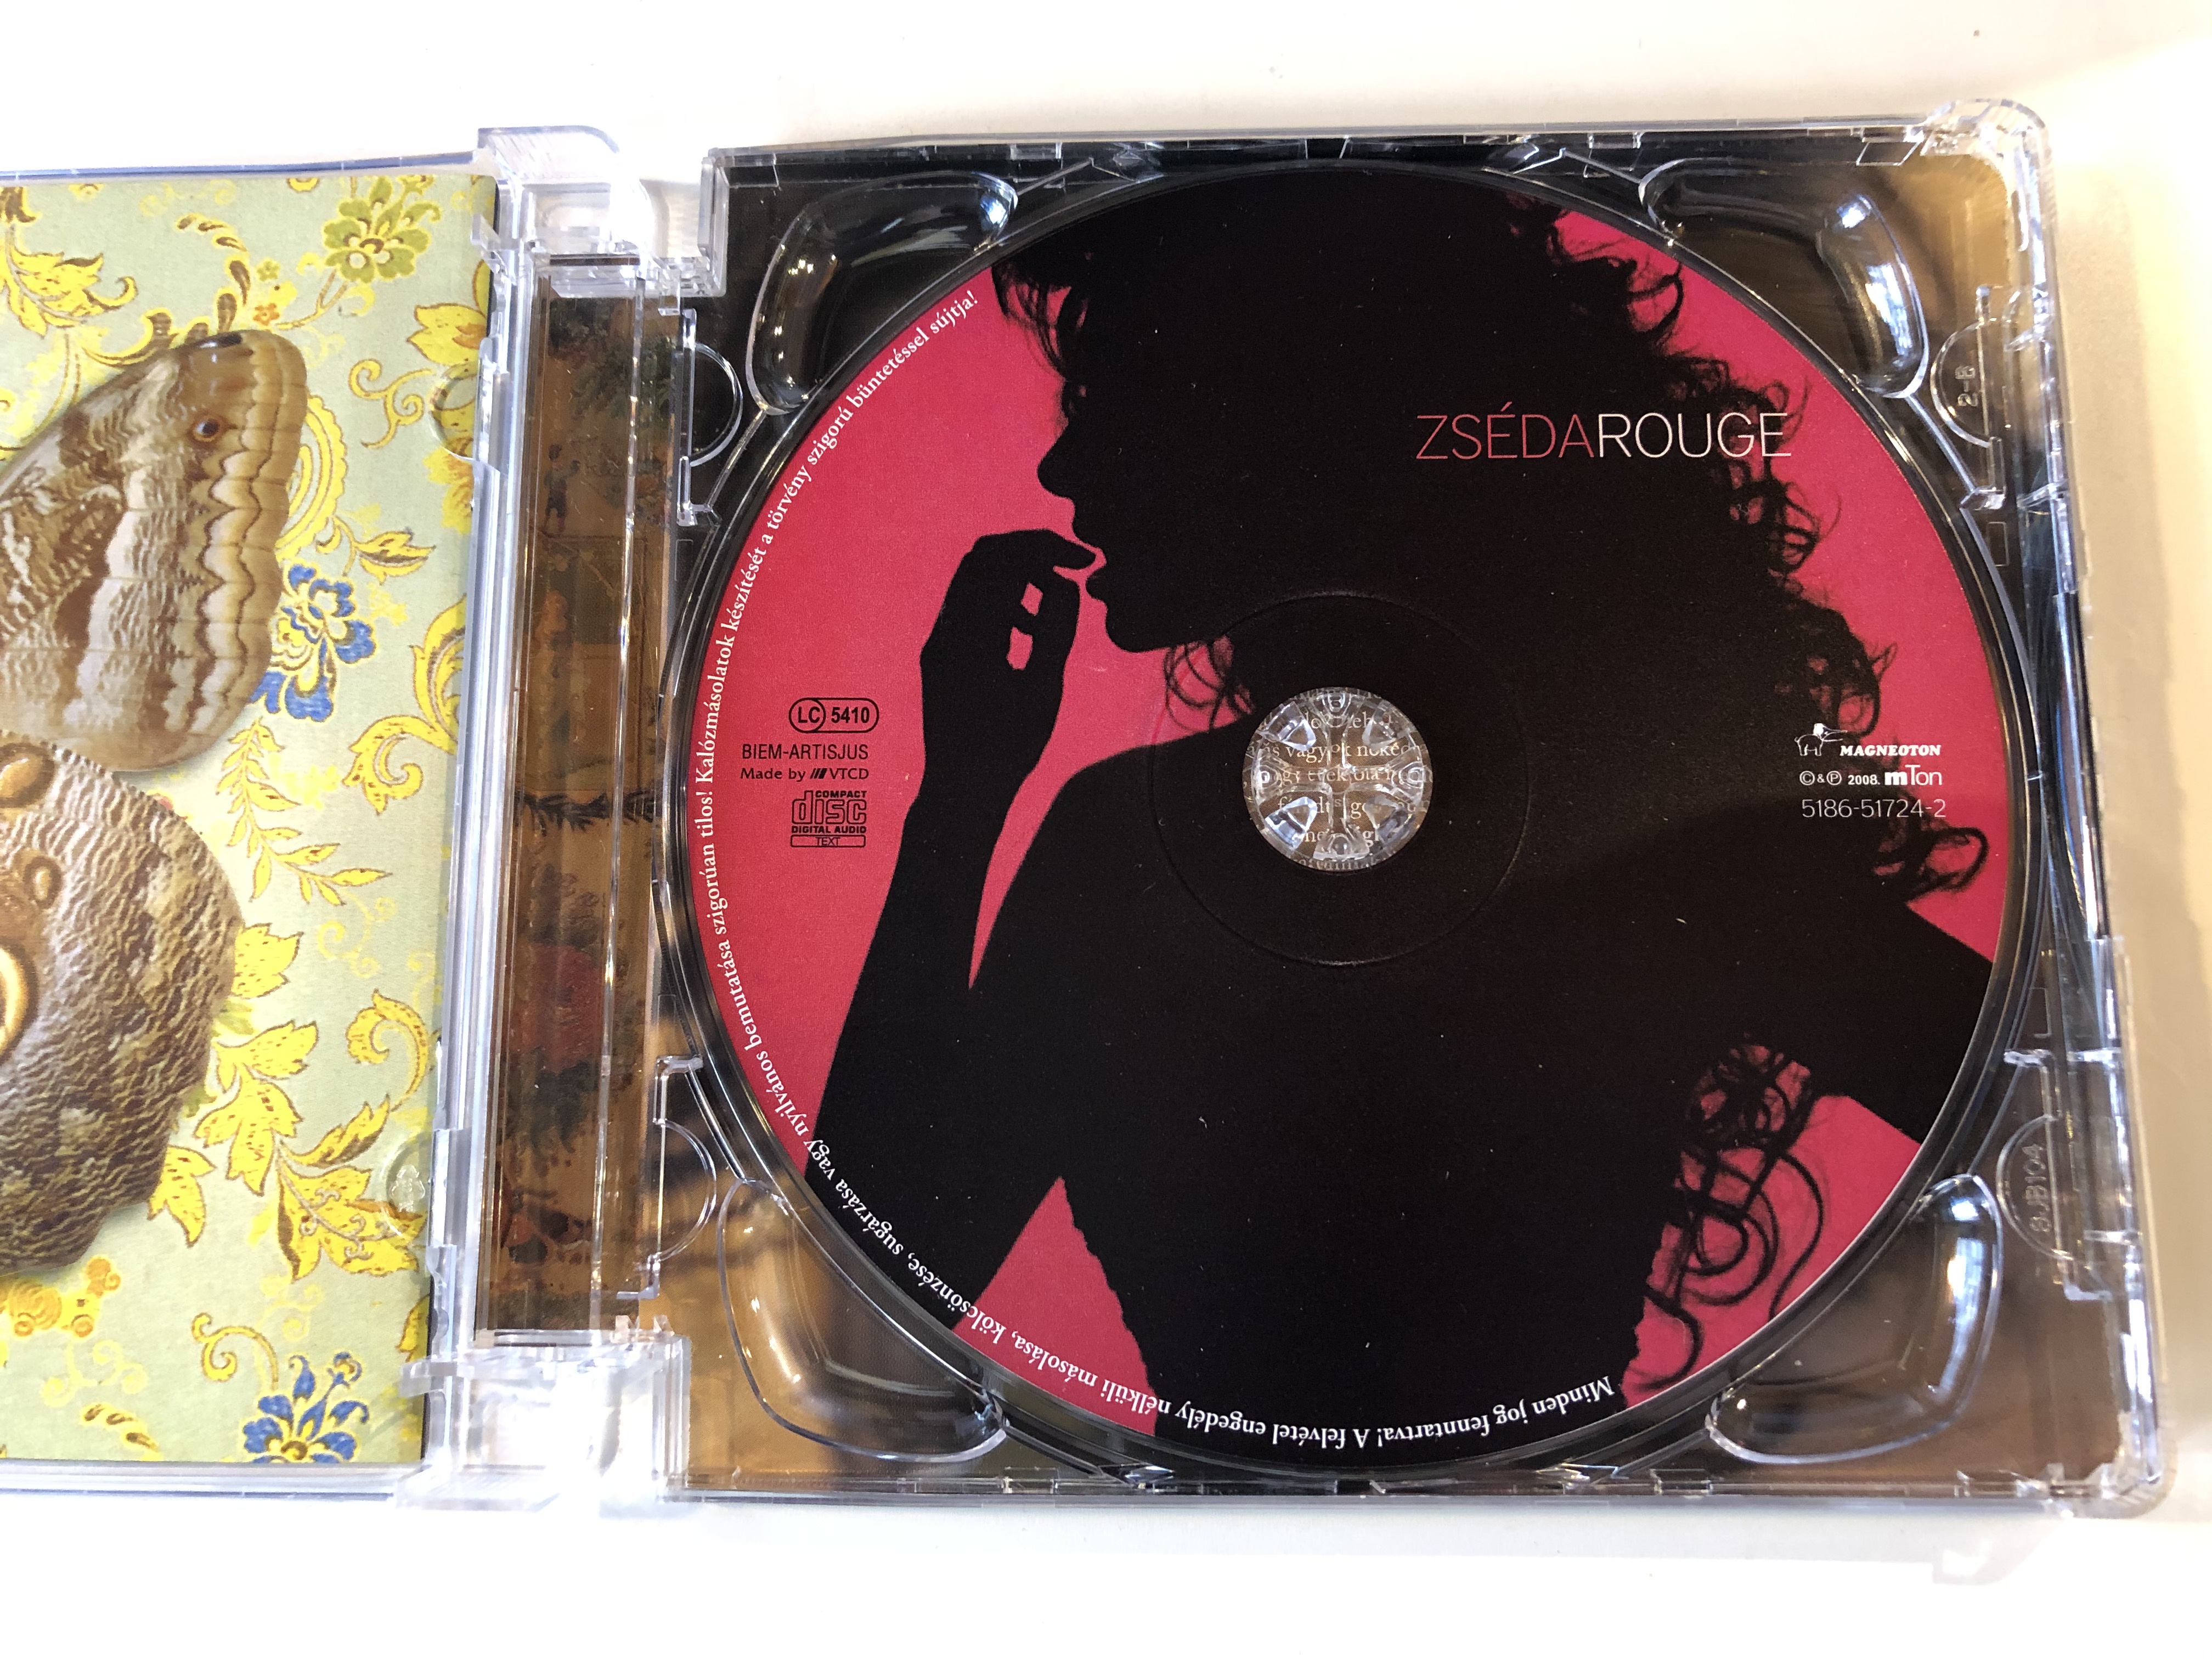 zs-da-rouge-magneoton-audio-cd-2008-5186-51724-2-2-.jpg